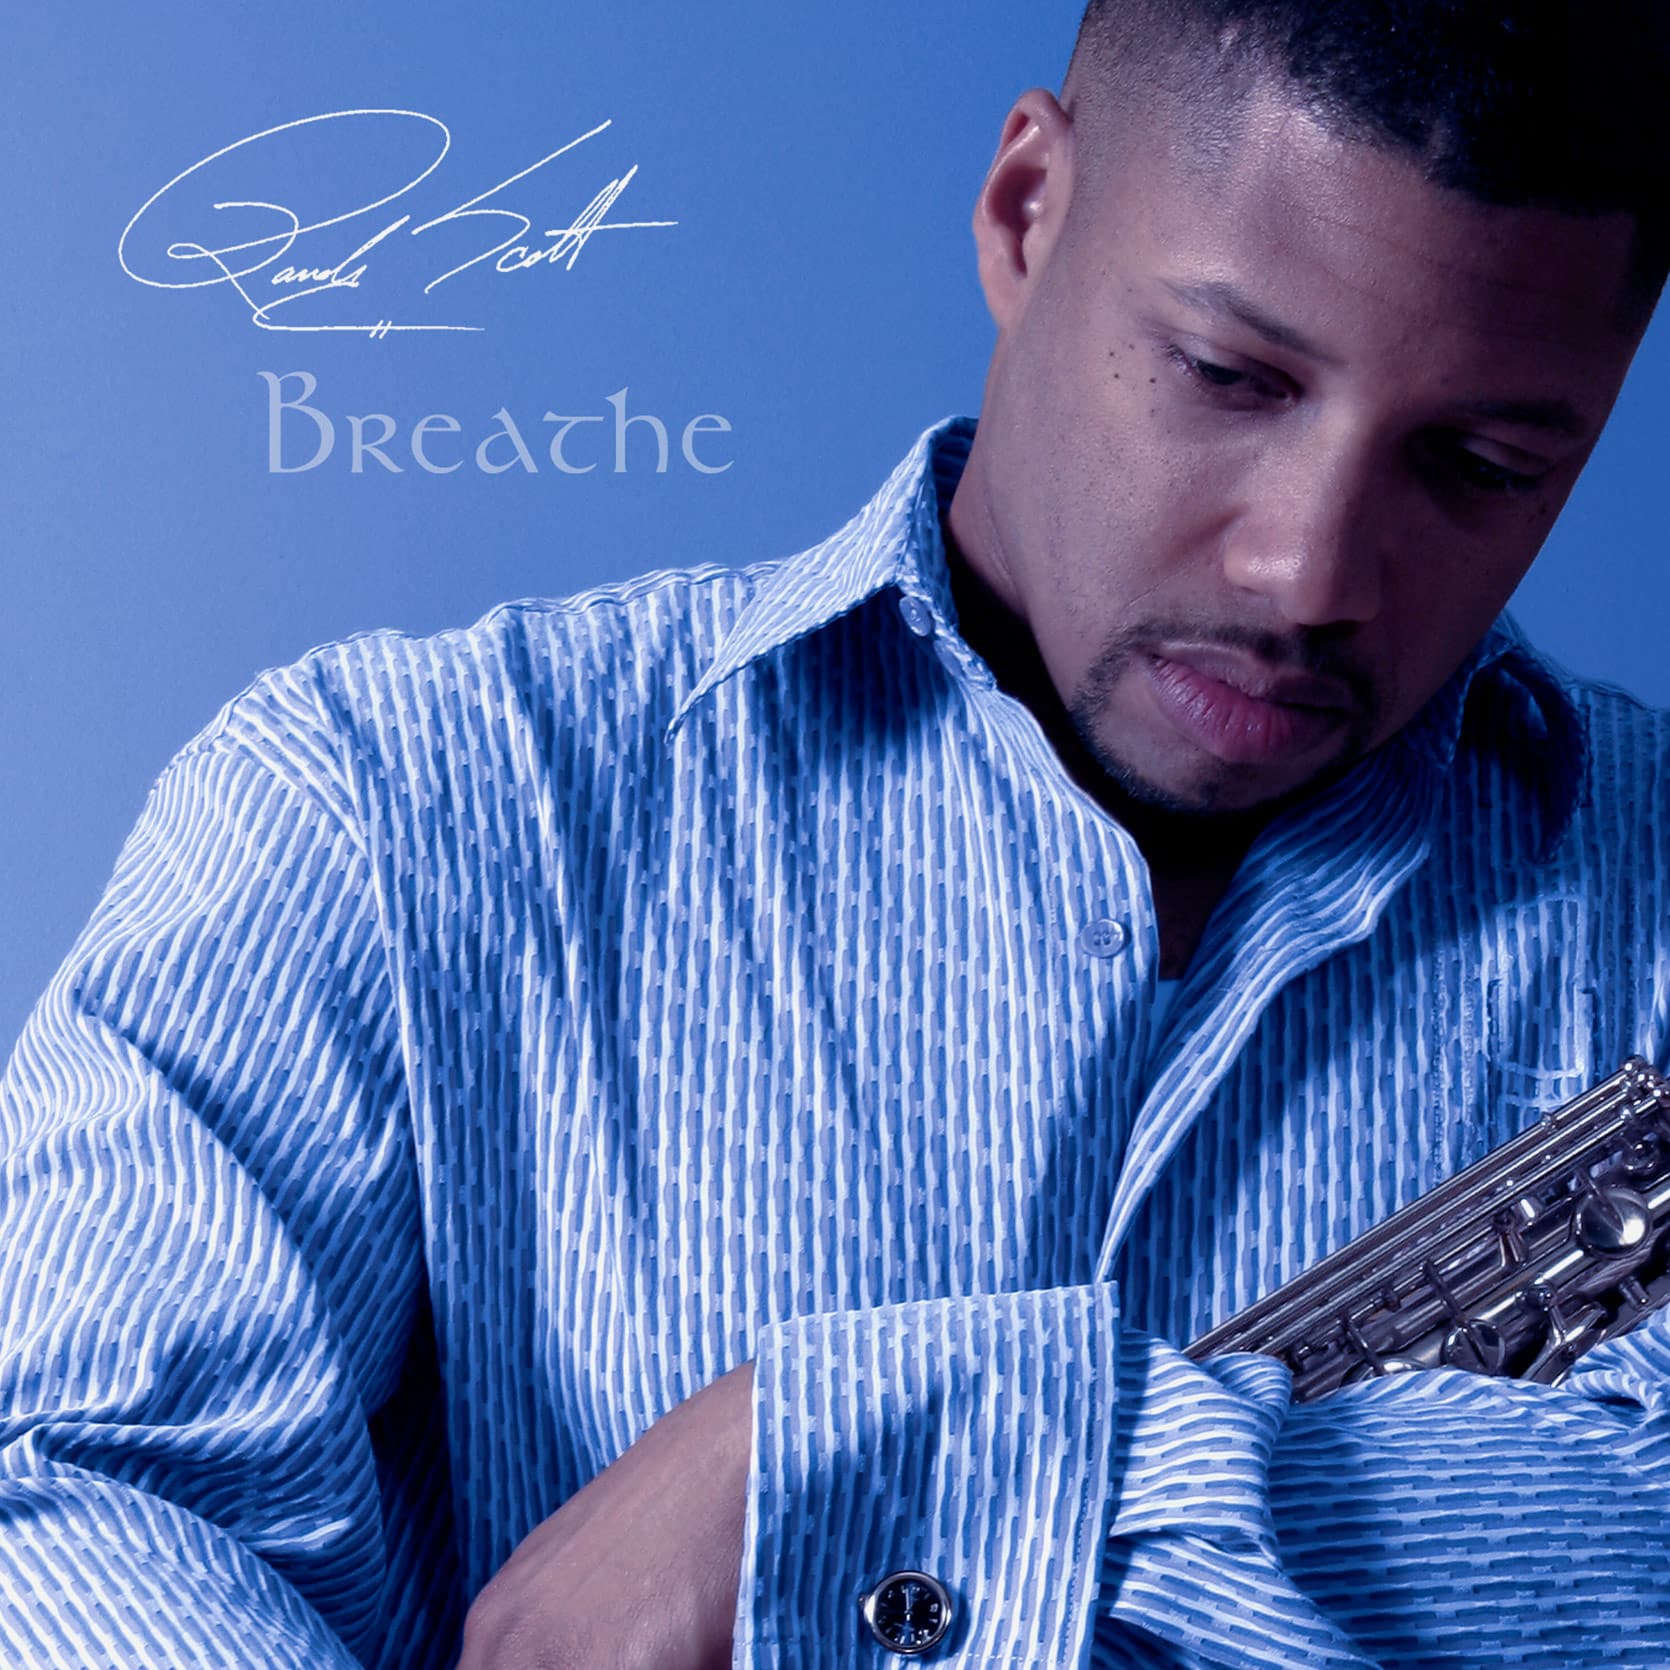 Breathe by Smooth Jazz recording artist Randy Scott